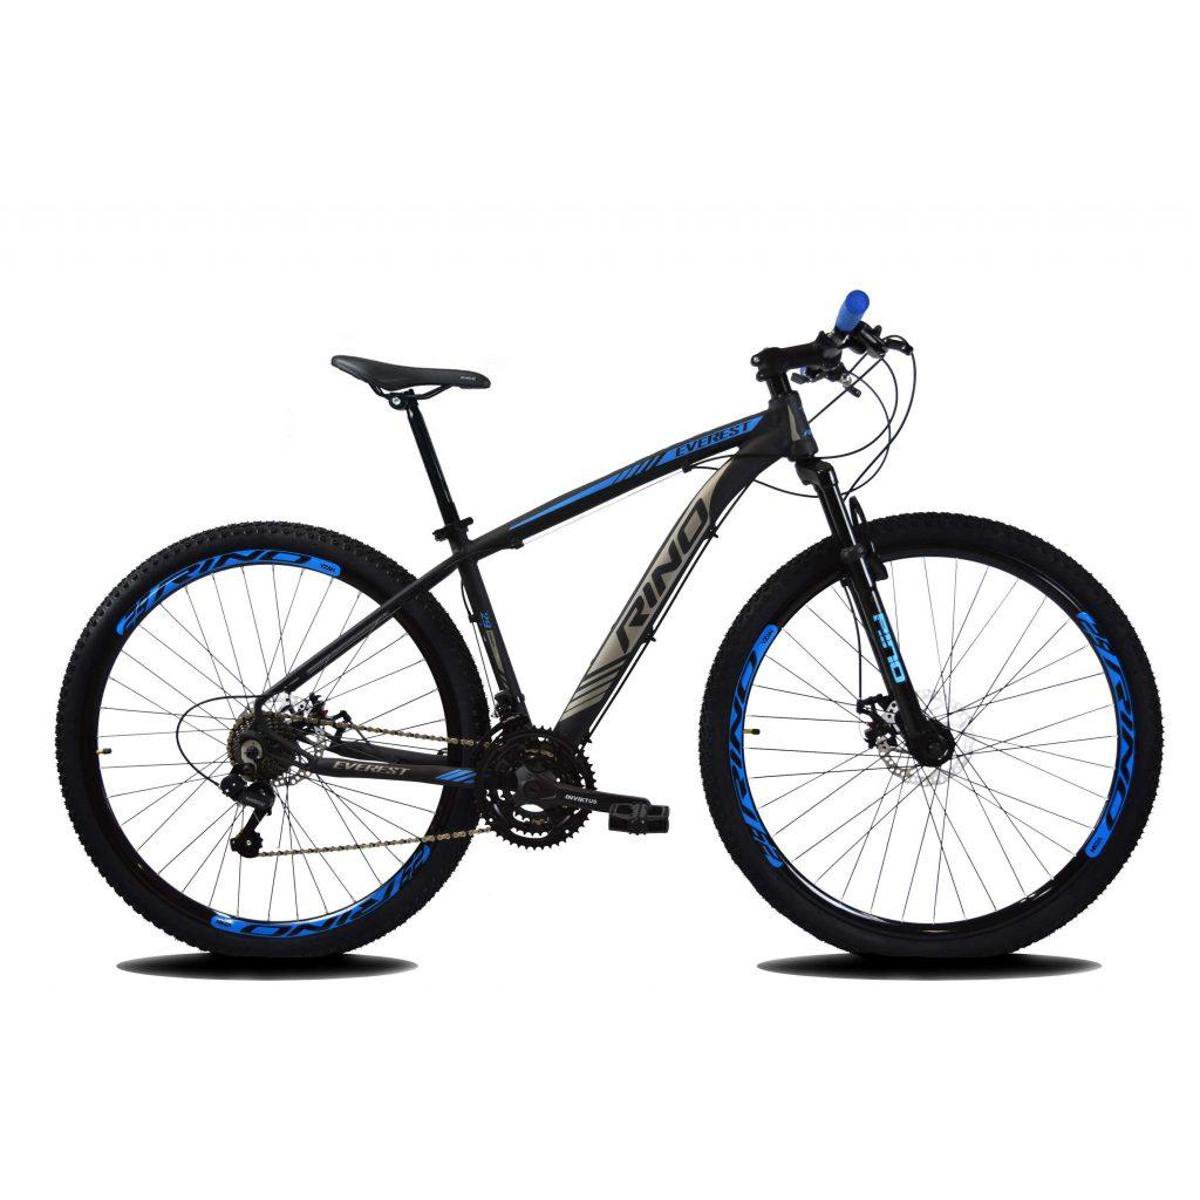 Bicicleta Aro 29 RINO Everest Freio Hidráulico Cambios Shimano 24v – Preto+Azul